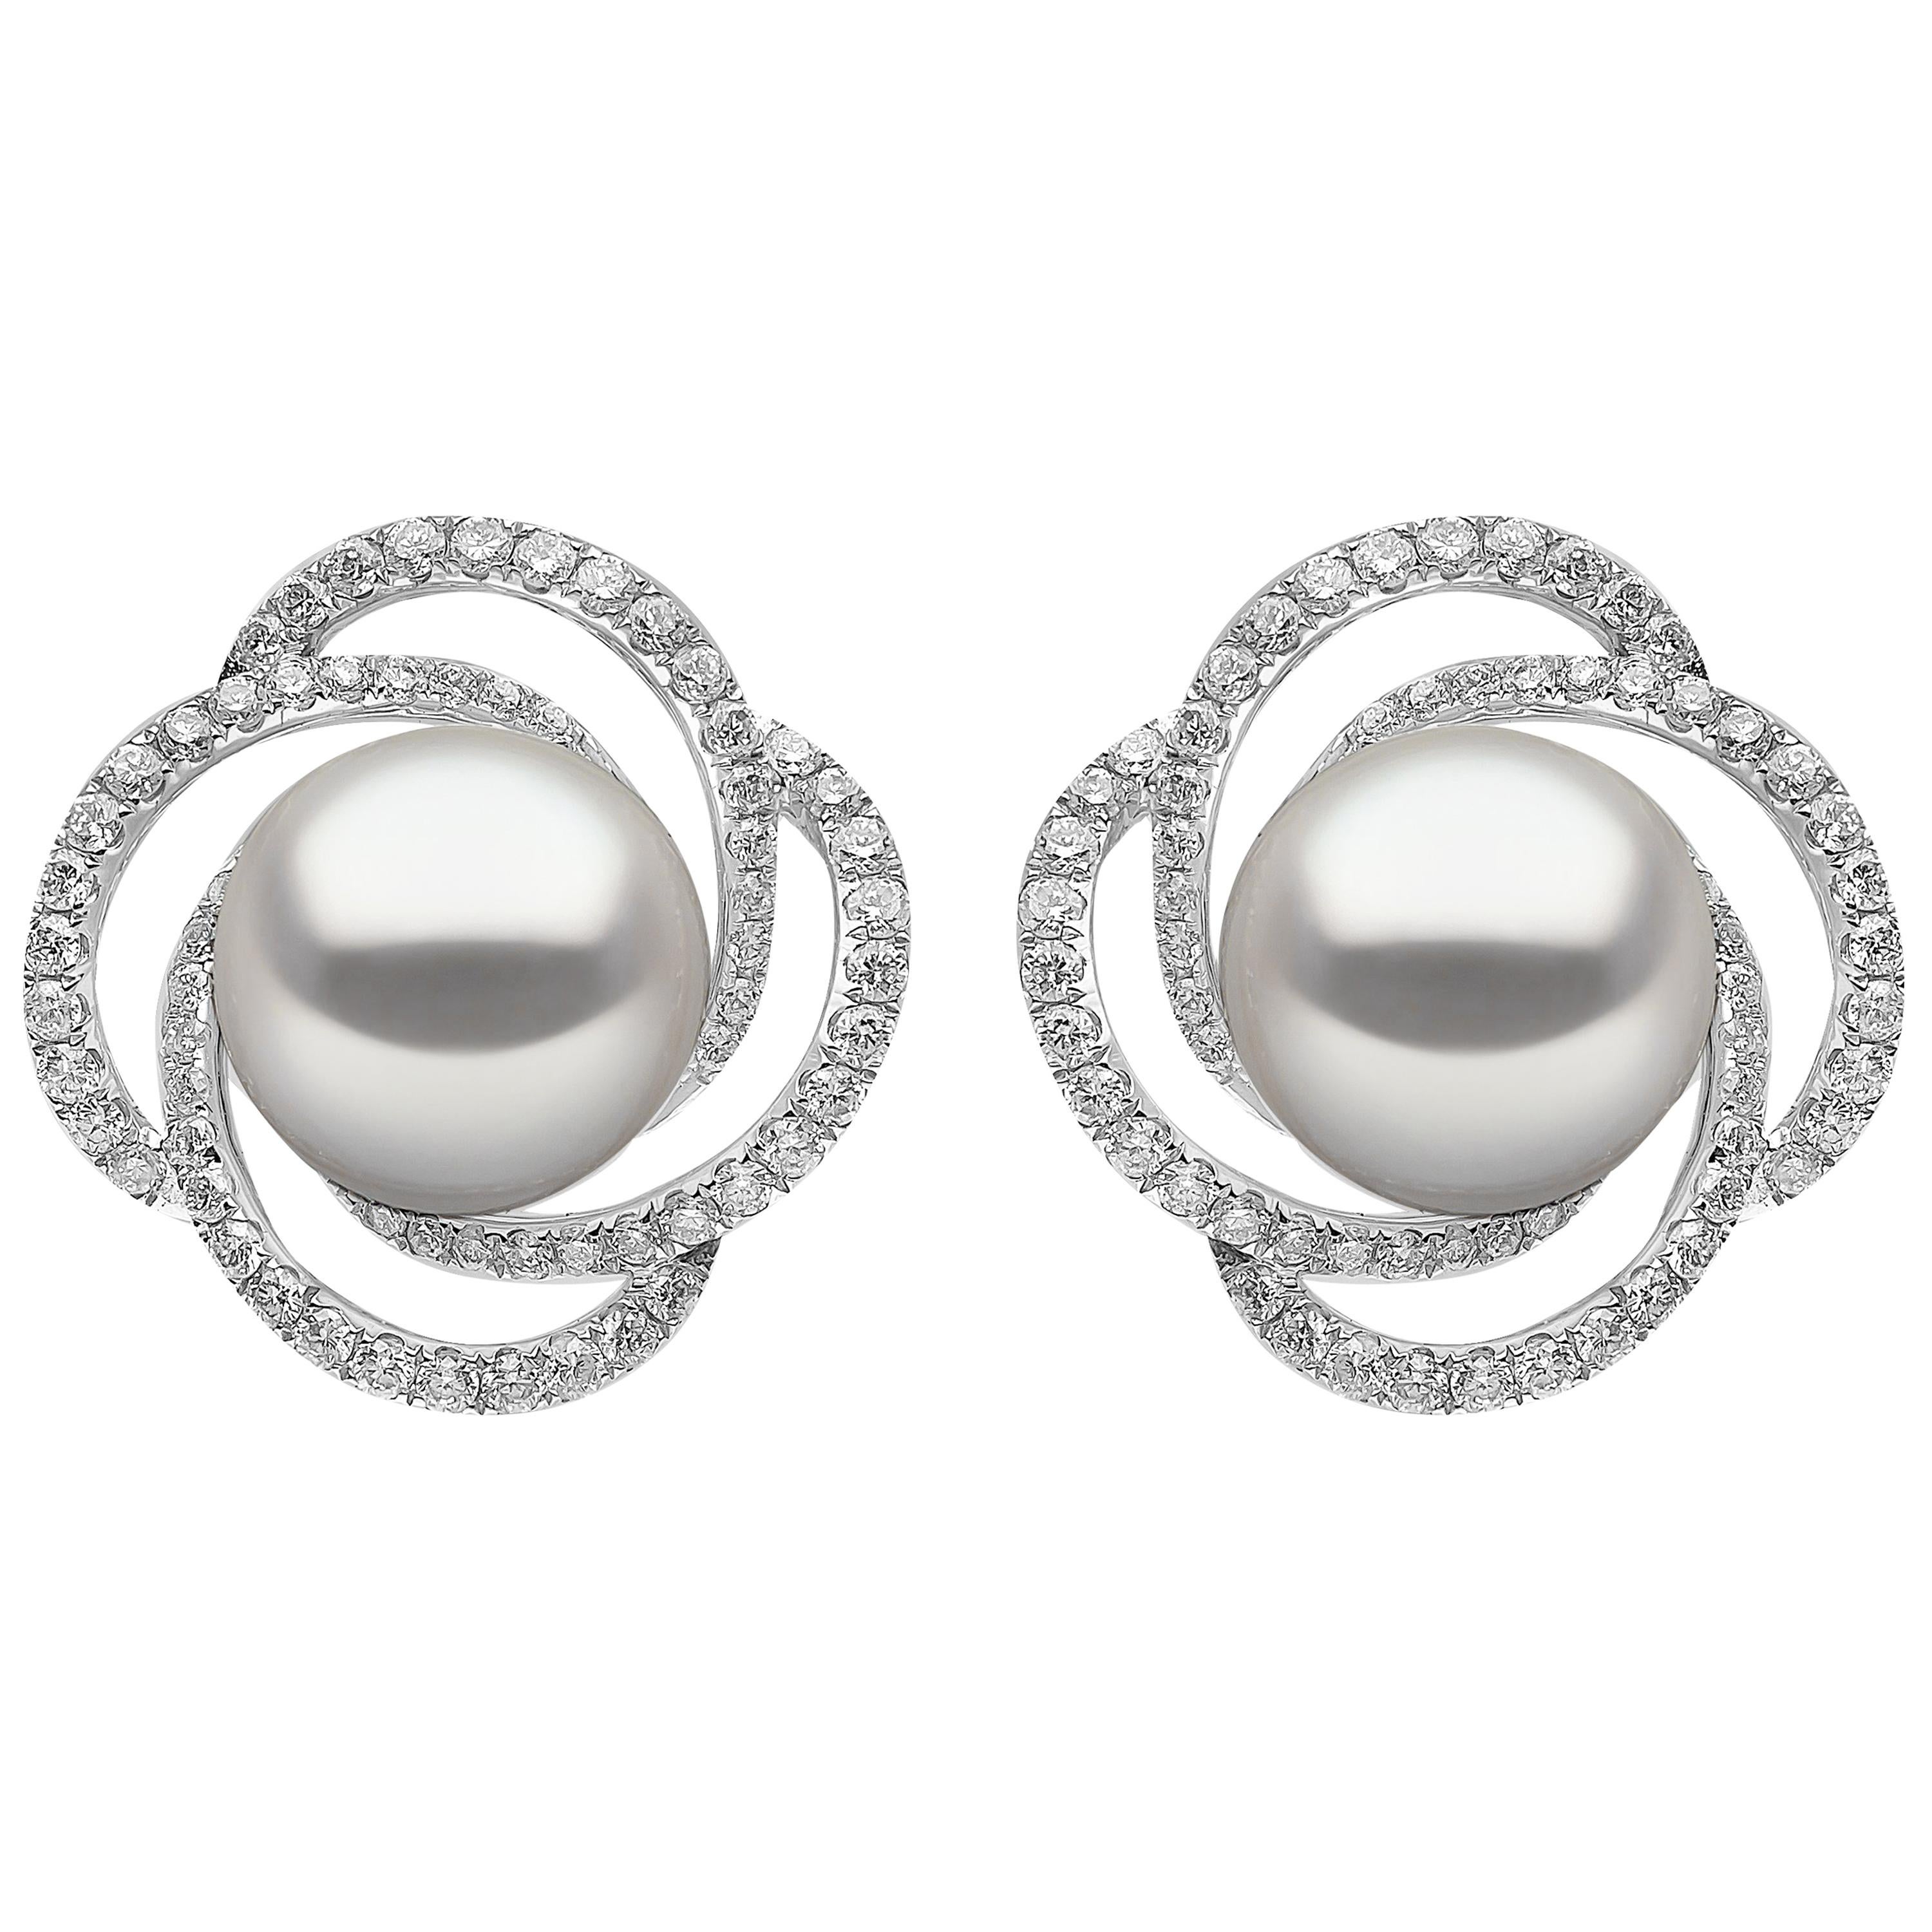 Yoko London Freshwater Pearl and Diamond Earrings Set in 18 Karat White Gold